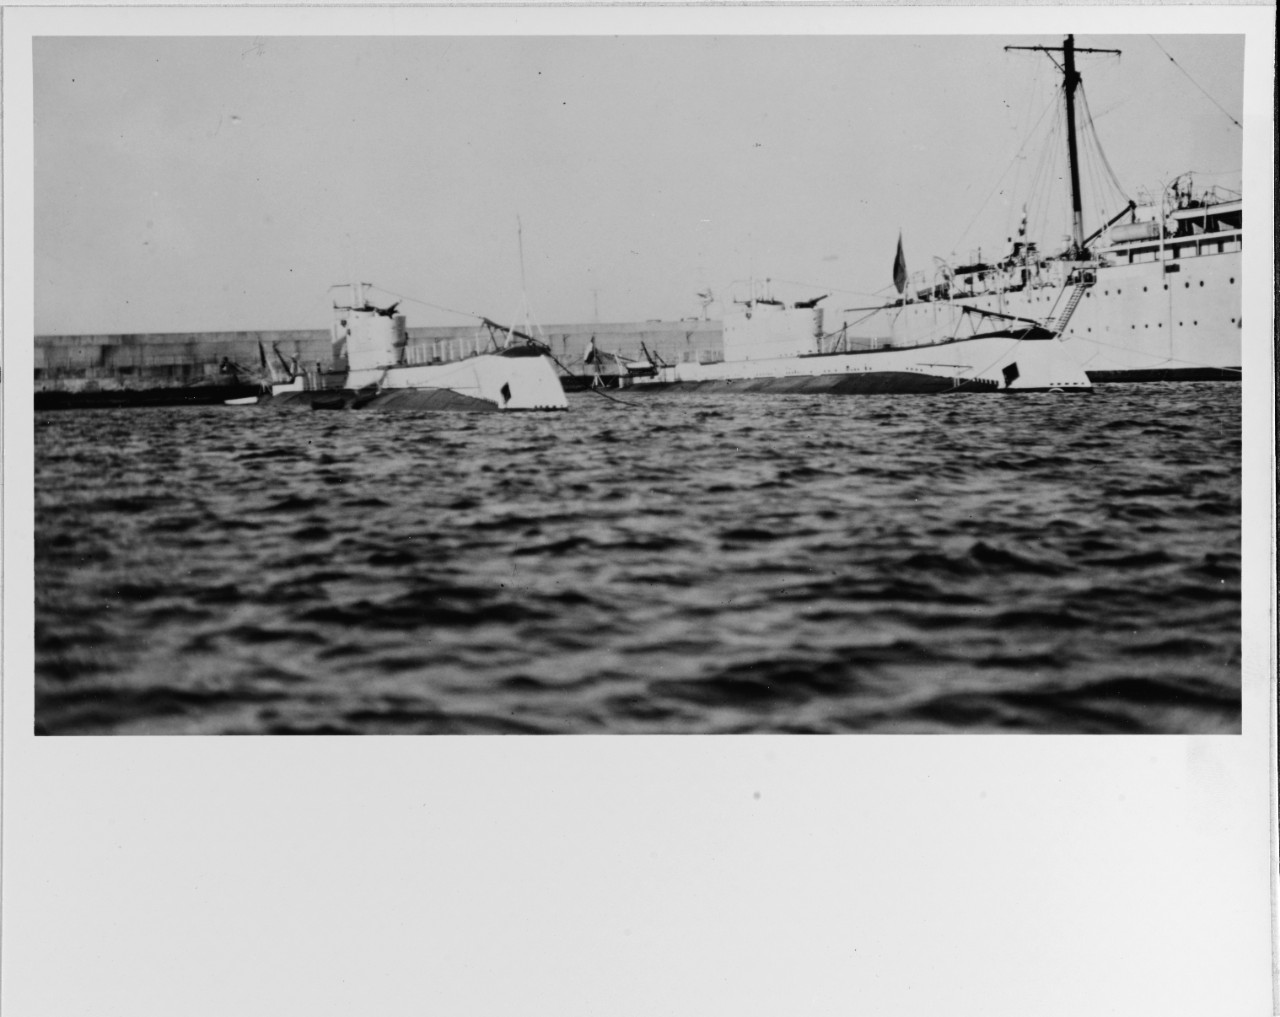 ALMIRANTE SIMPSON and CAPITAN THOMPSON (Chilean Submarines, 1929)